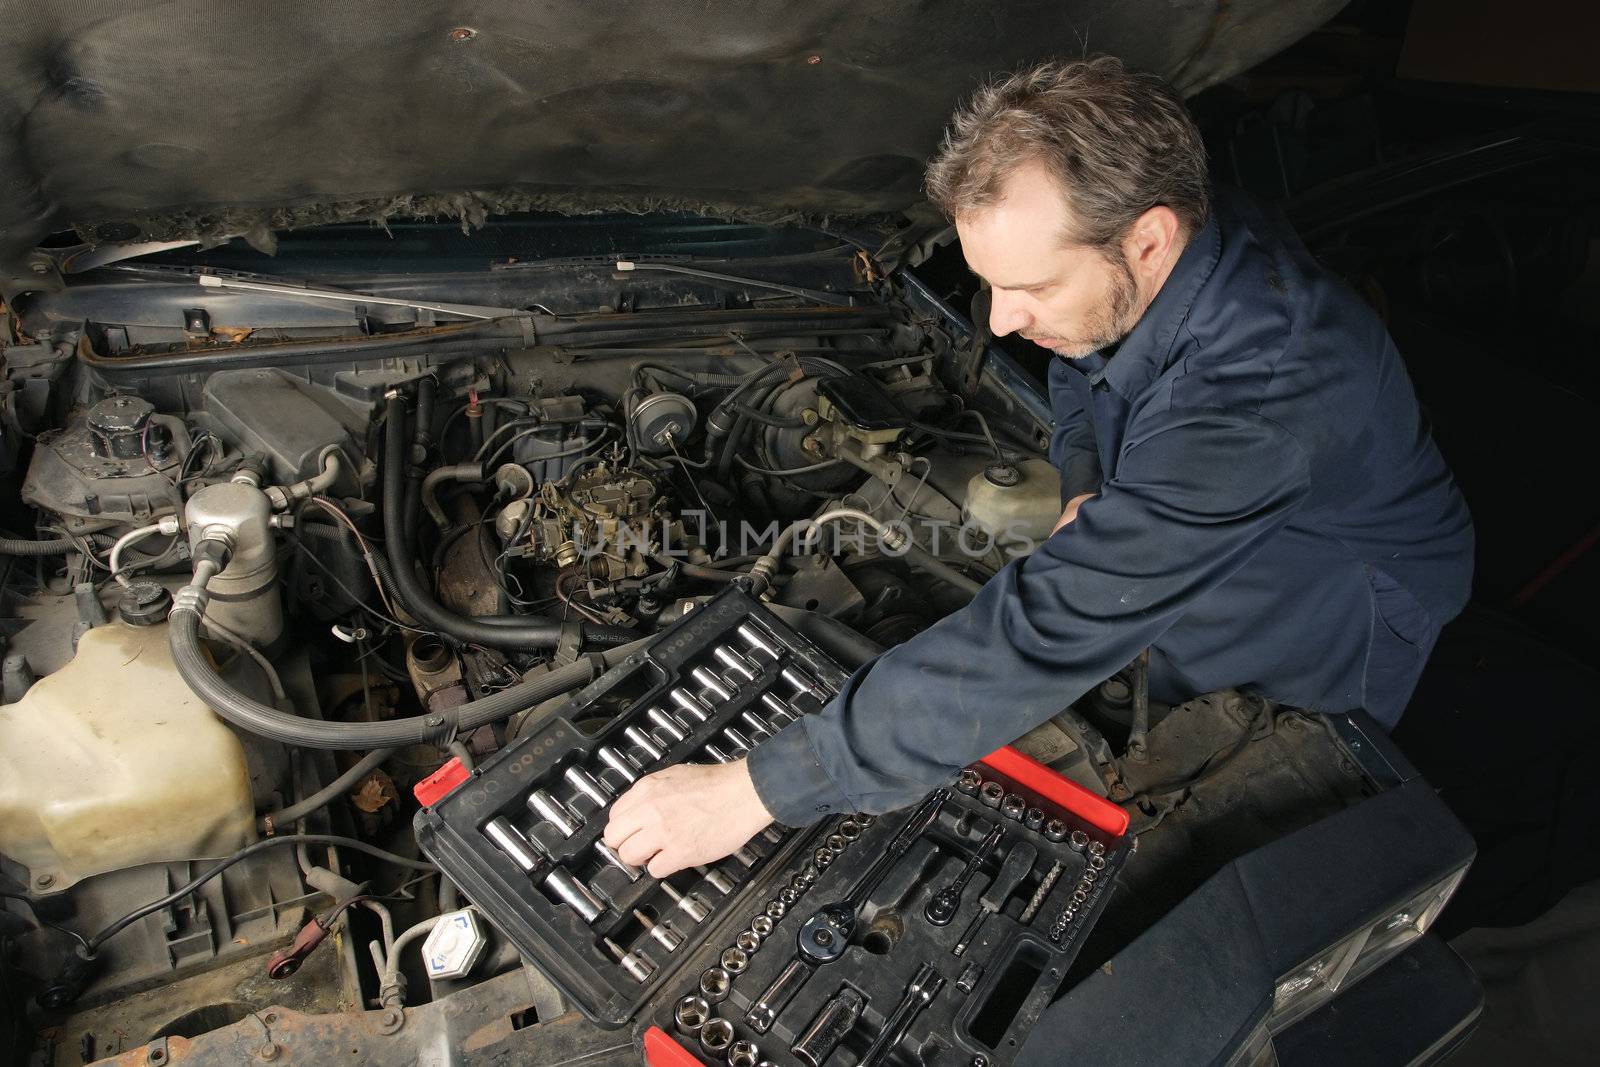 A mechanic repairing an engine of an old car.